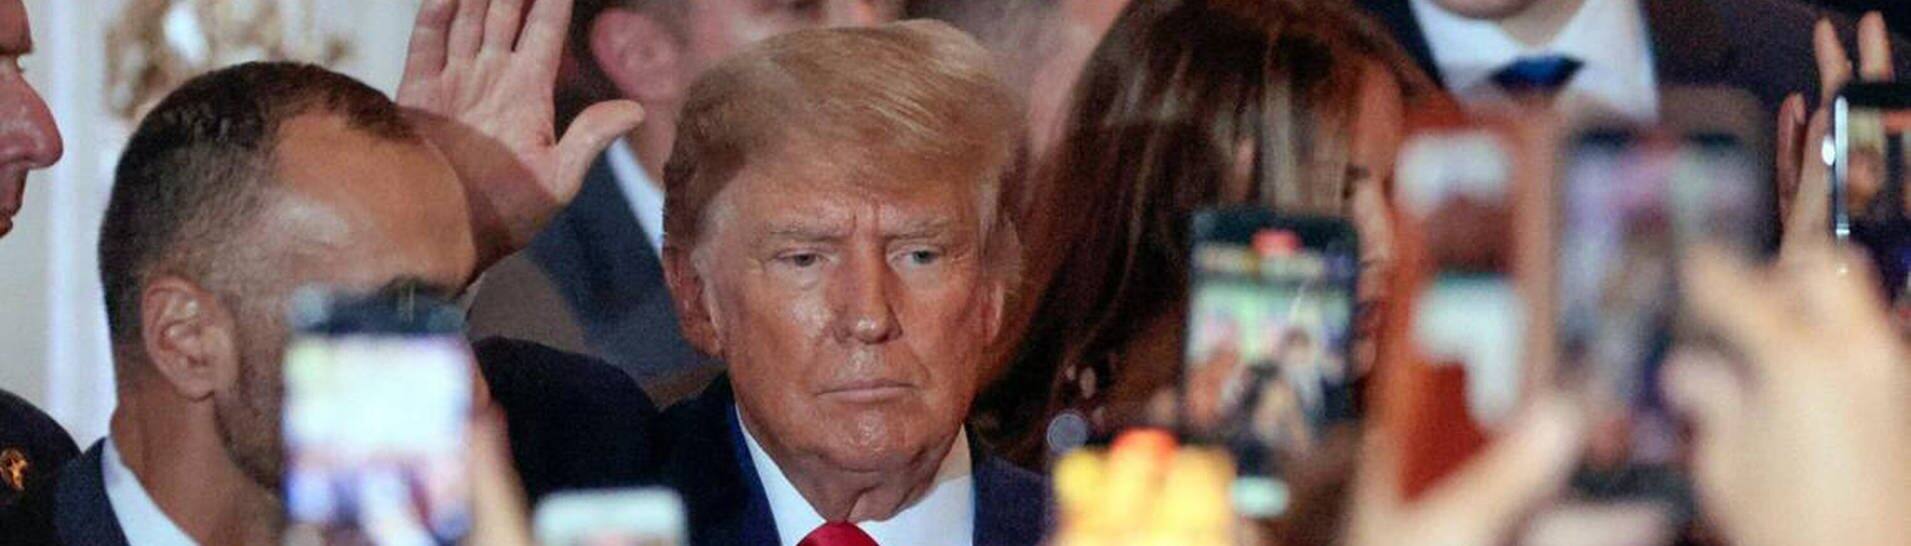 Trump in seinem Anwesen Mar-a-Lago. (Foto: IMAGO, IMAGO / ZUMA Wire)